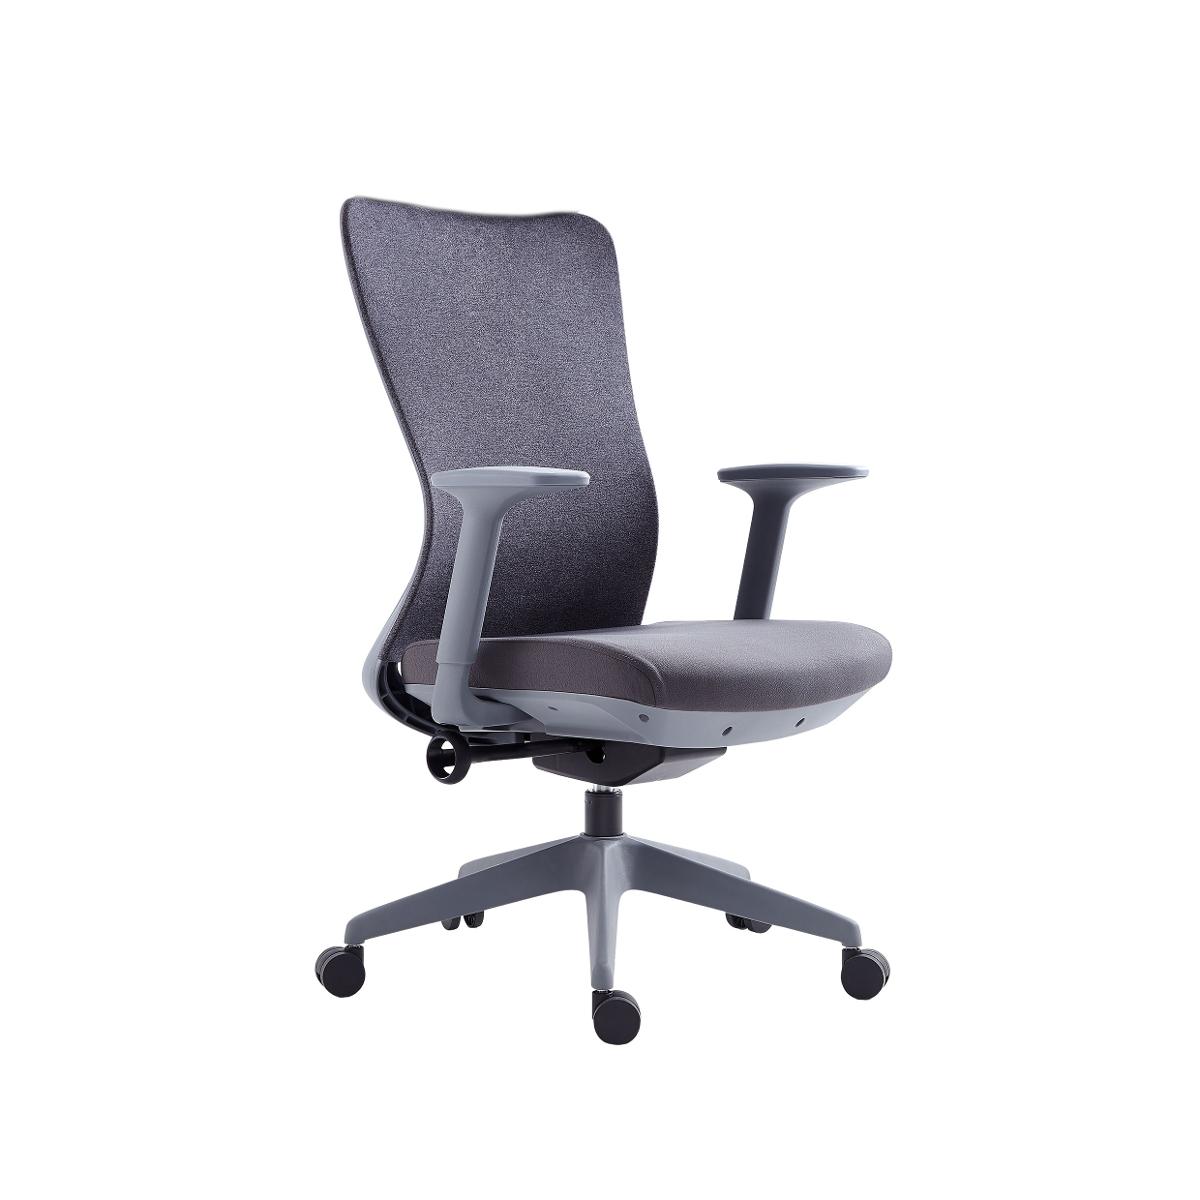 Super Chair เก้าอี้สำนักงาน รุ่น M123-3 M Grey